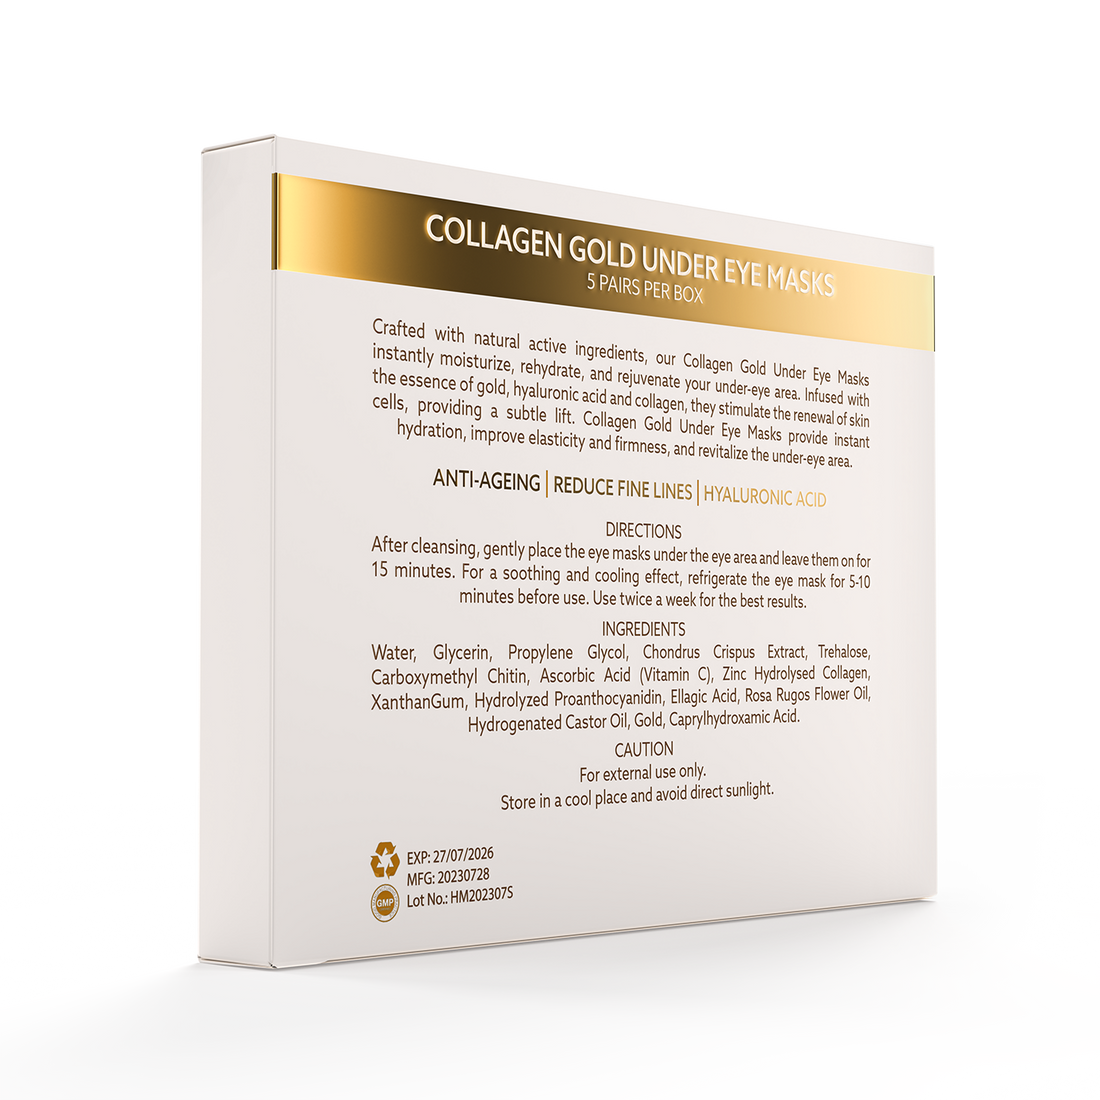 TheAgeHack Collagen Gold Under Eye Masks Nutrition and Ingredients